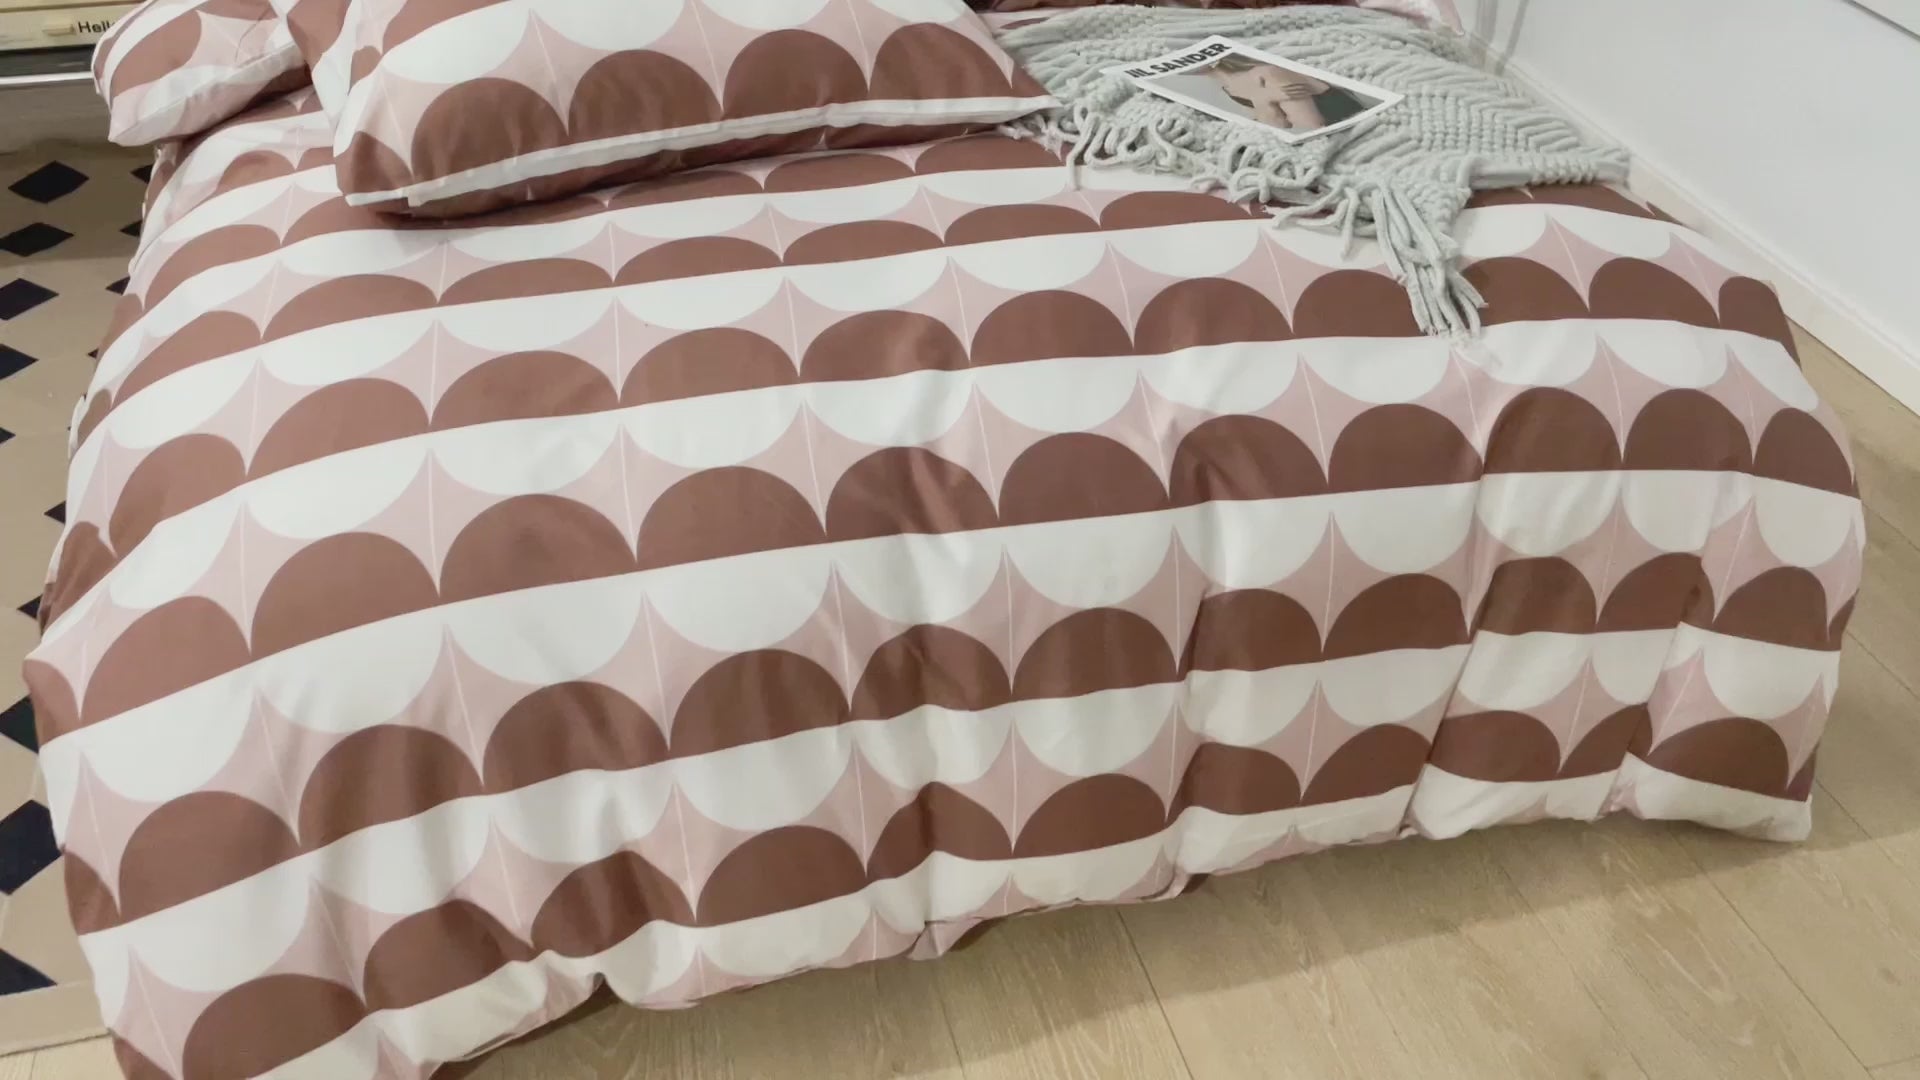 Single size 4 pieces Bedding Set without filler, Circle Design Brown Color, Busdeals Today